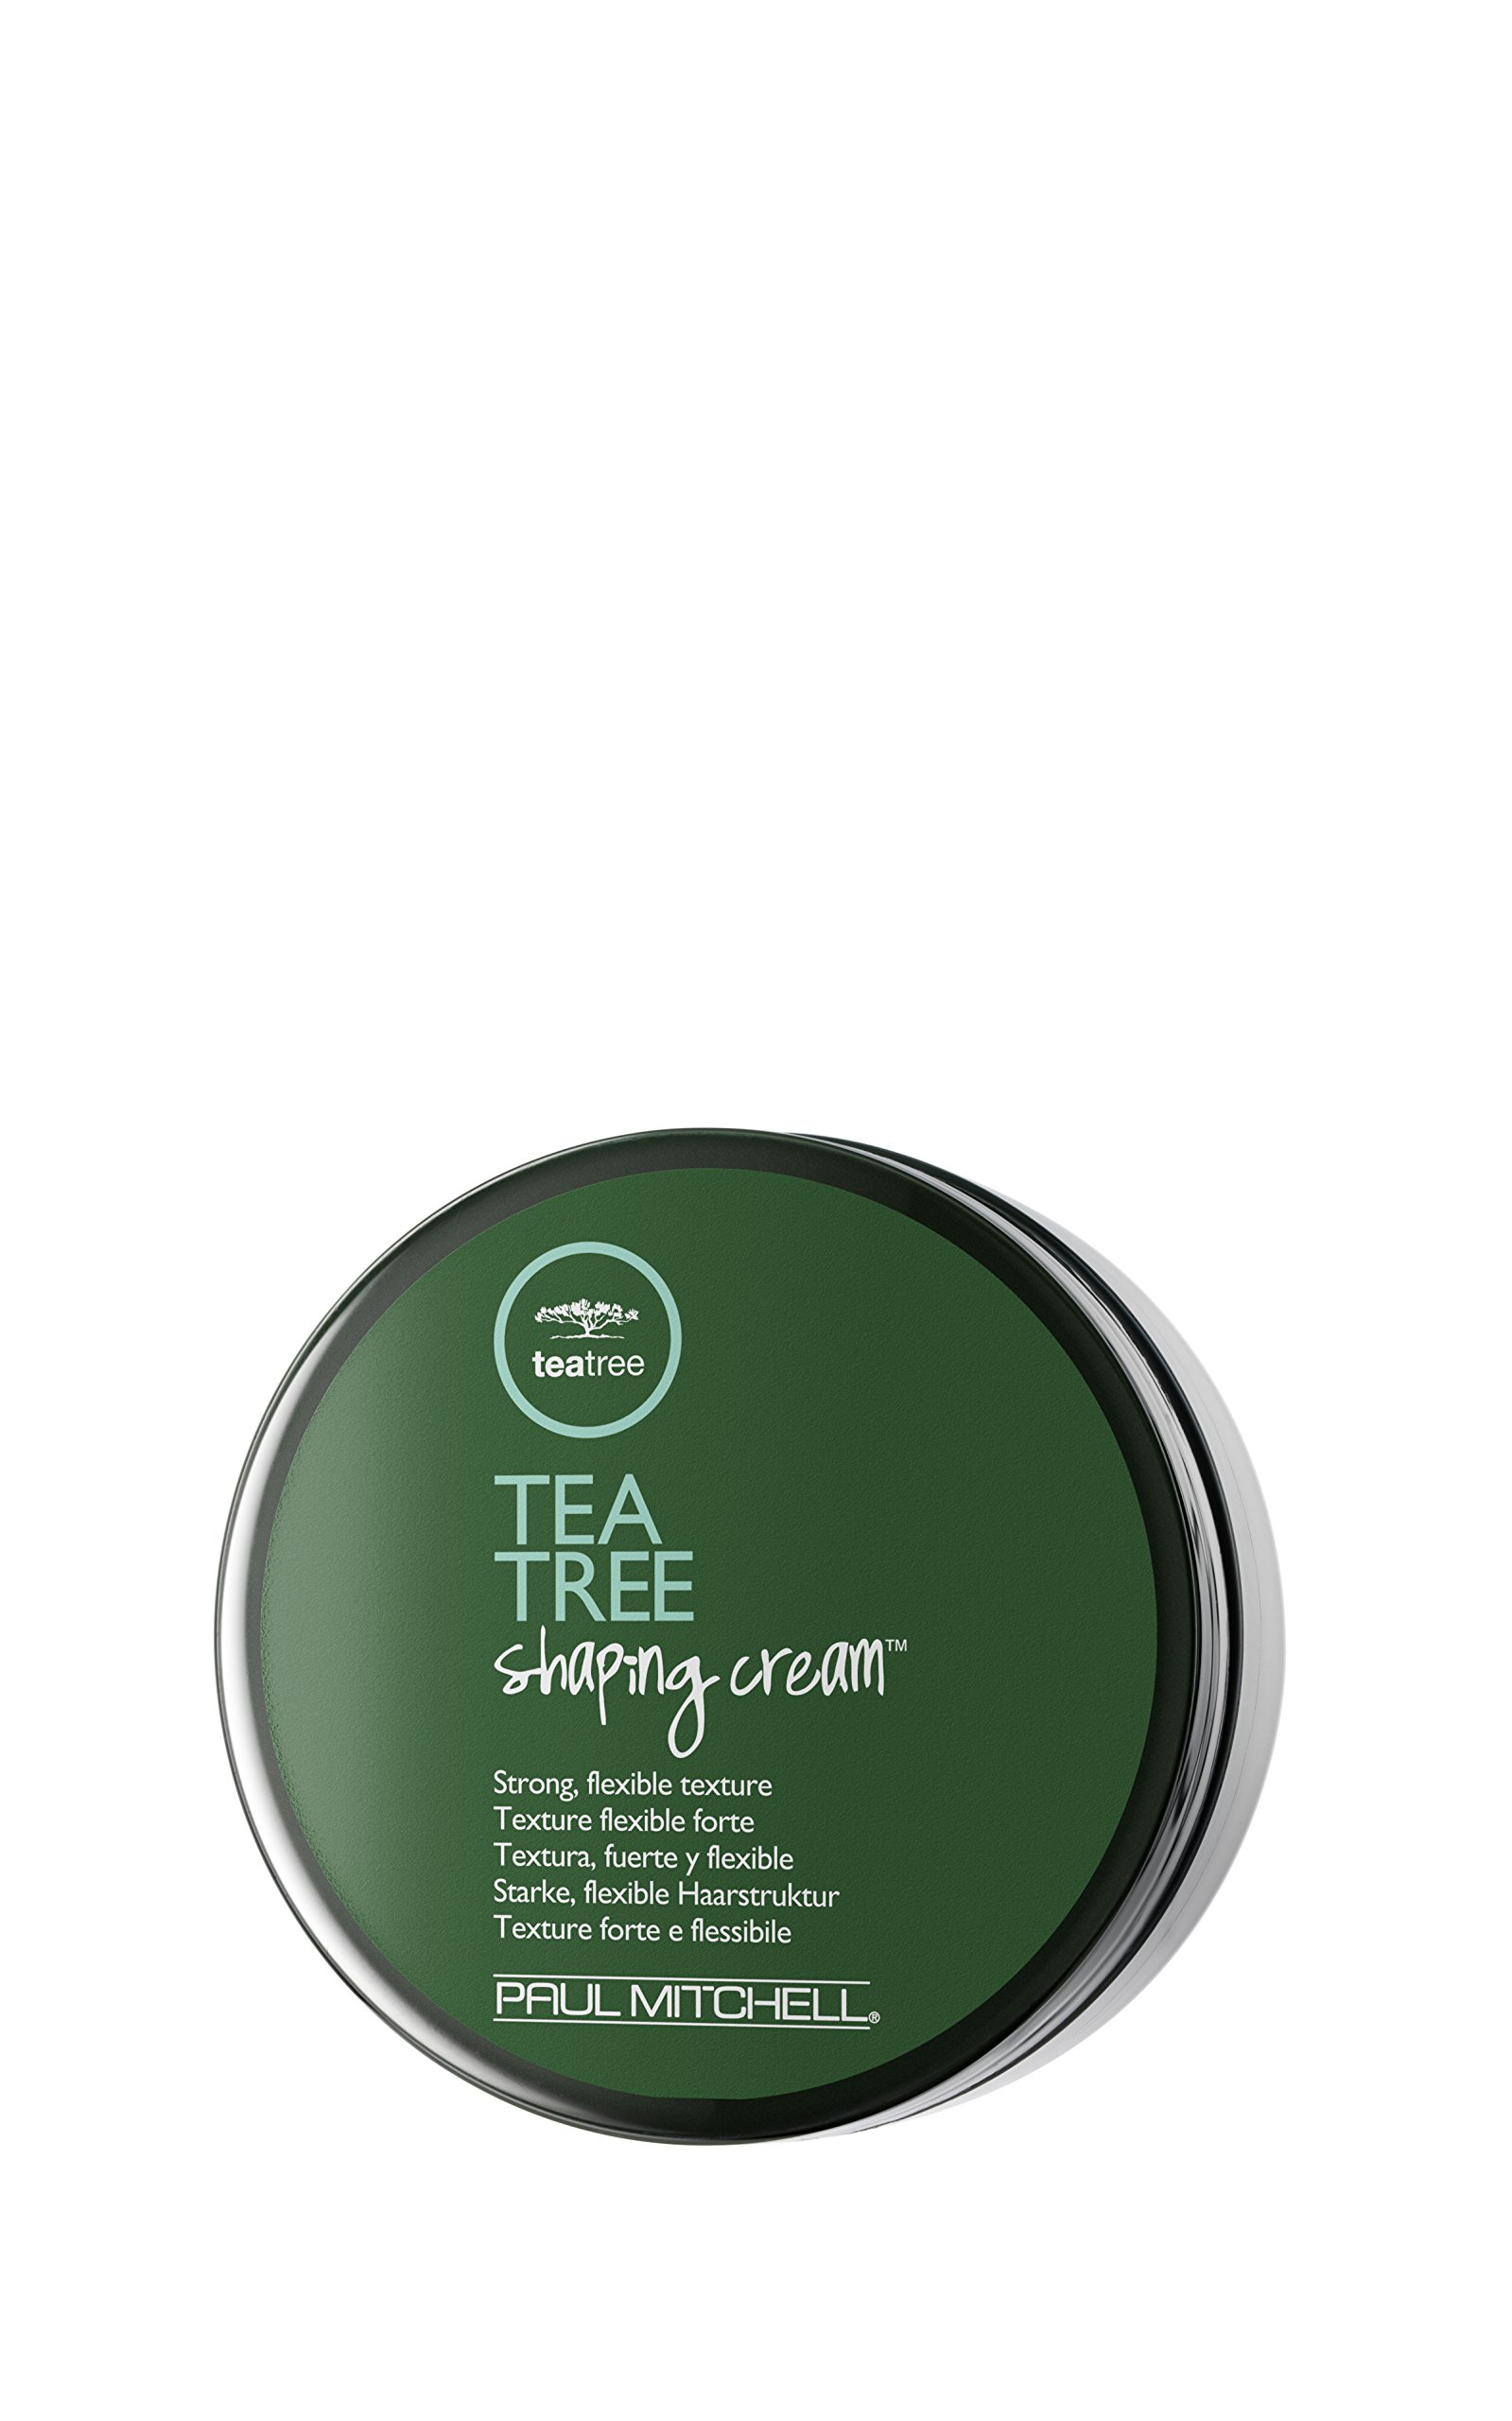 paul mitchell tea tree shaping cream review